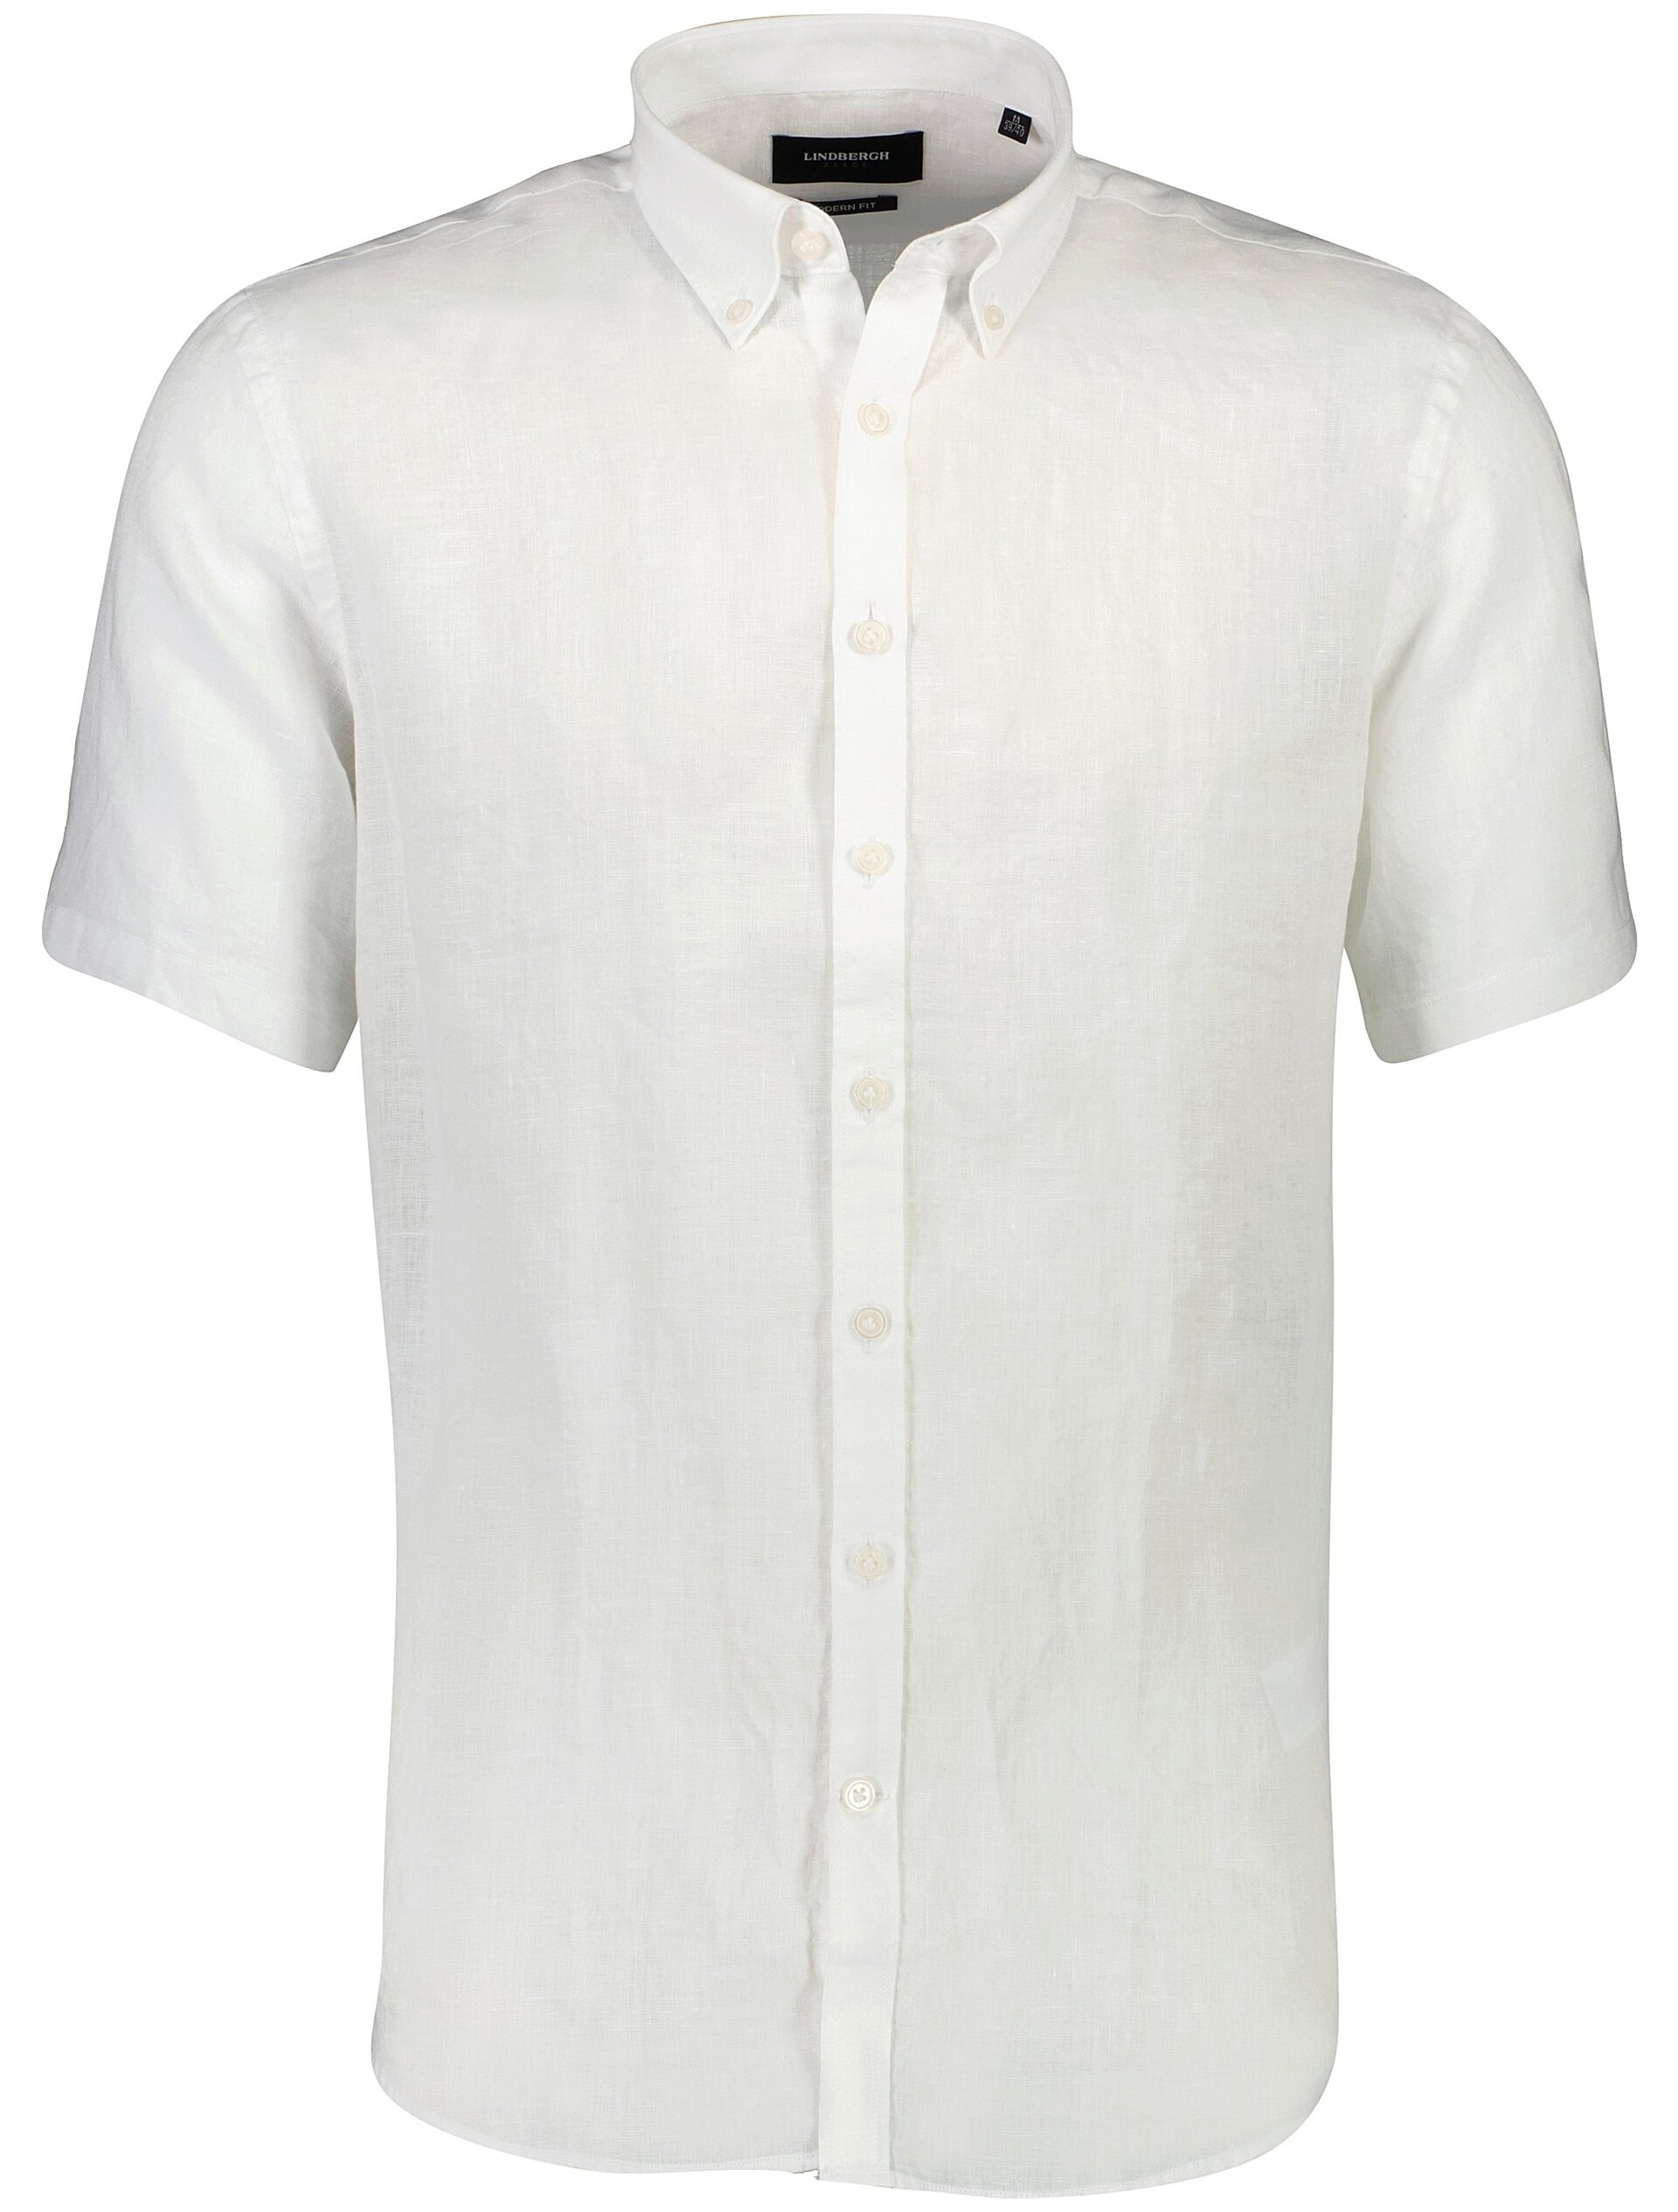 Lindbergh Linen shirt white / white